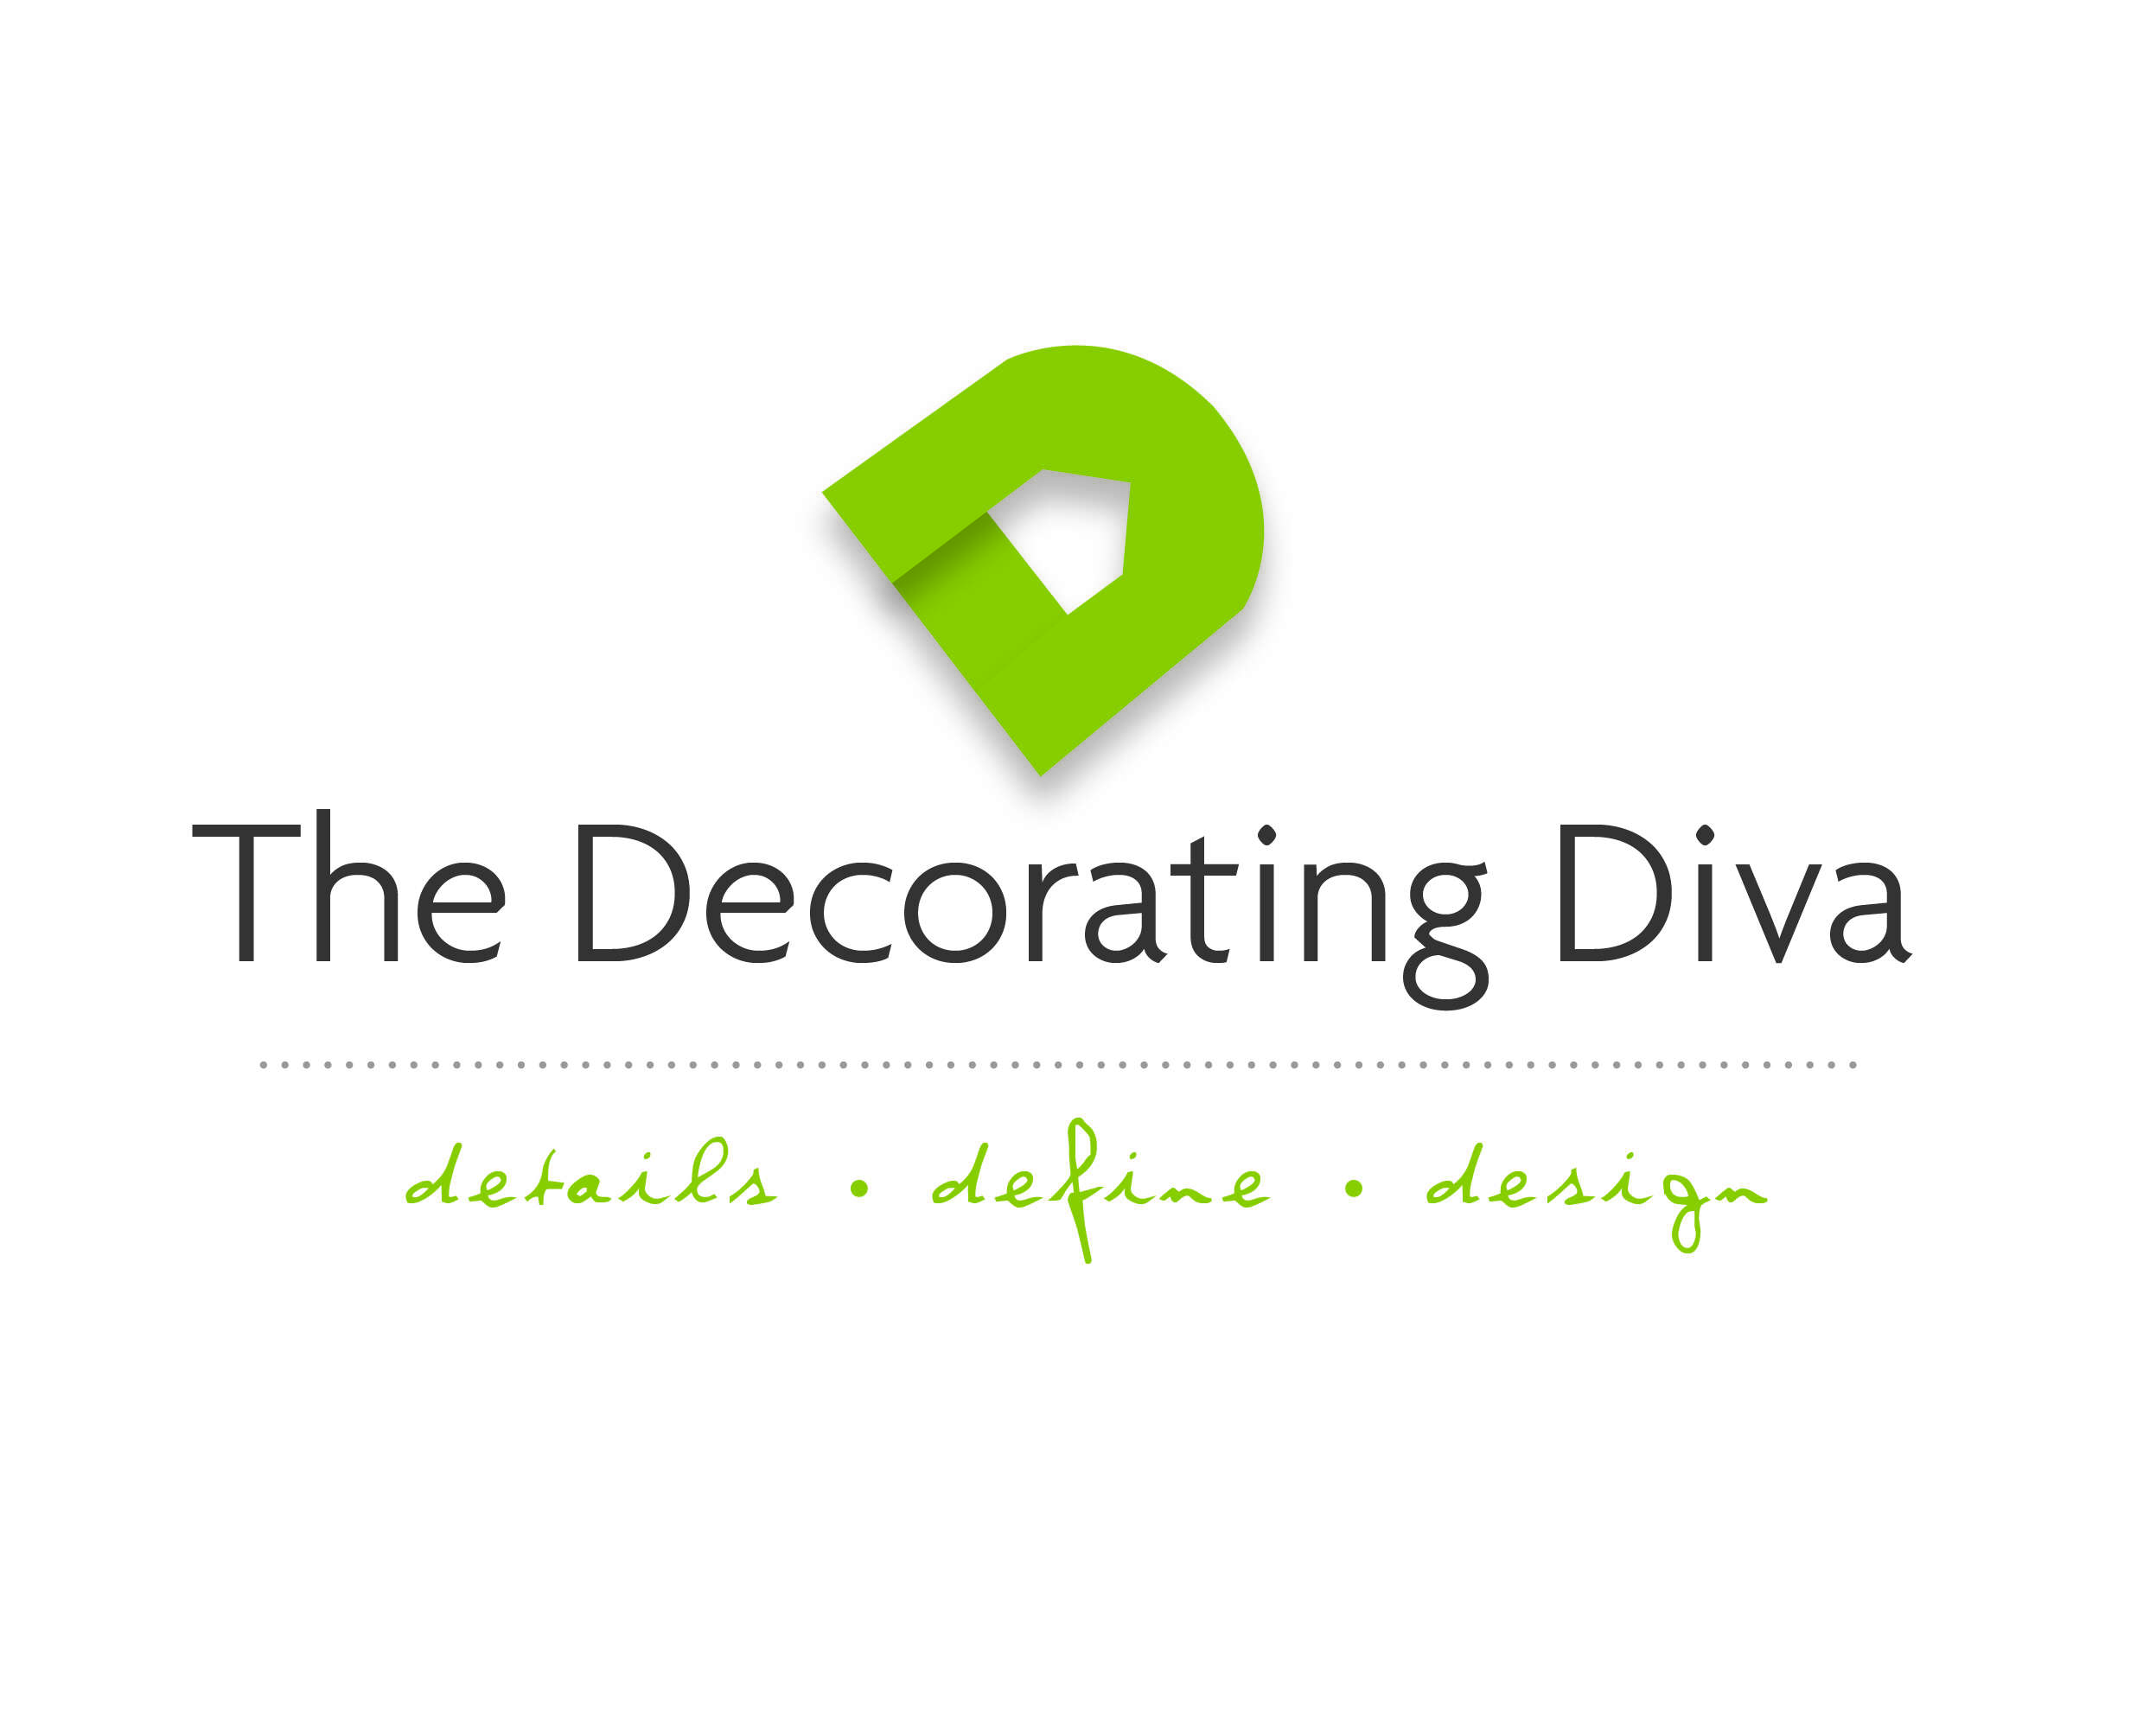 The Decorating Diva